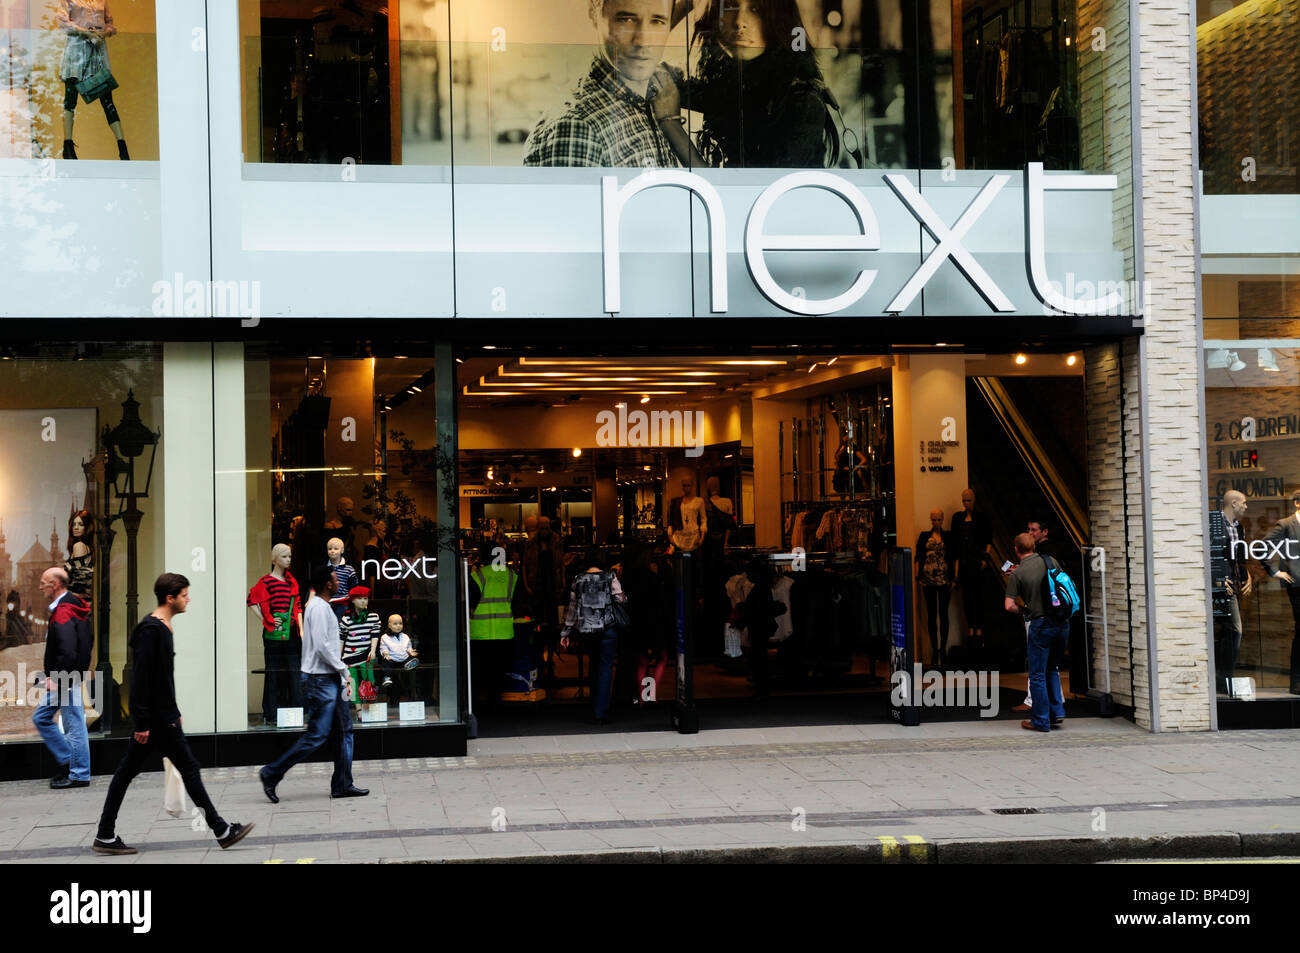 Next Clothes Shop, Oxford Sreet, London, England, UK Stock Photo